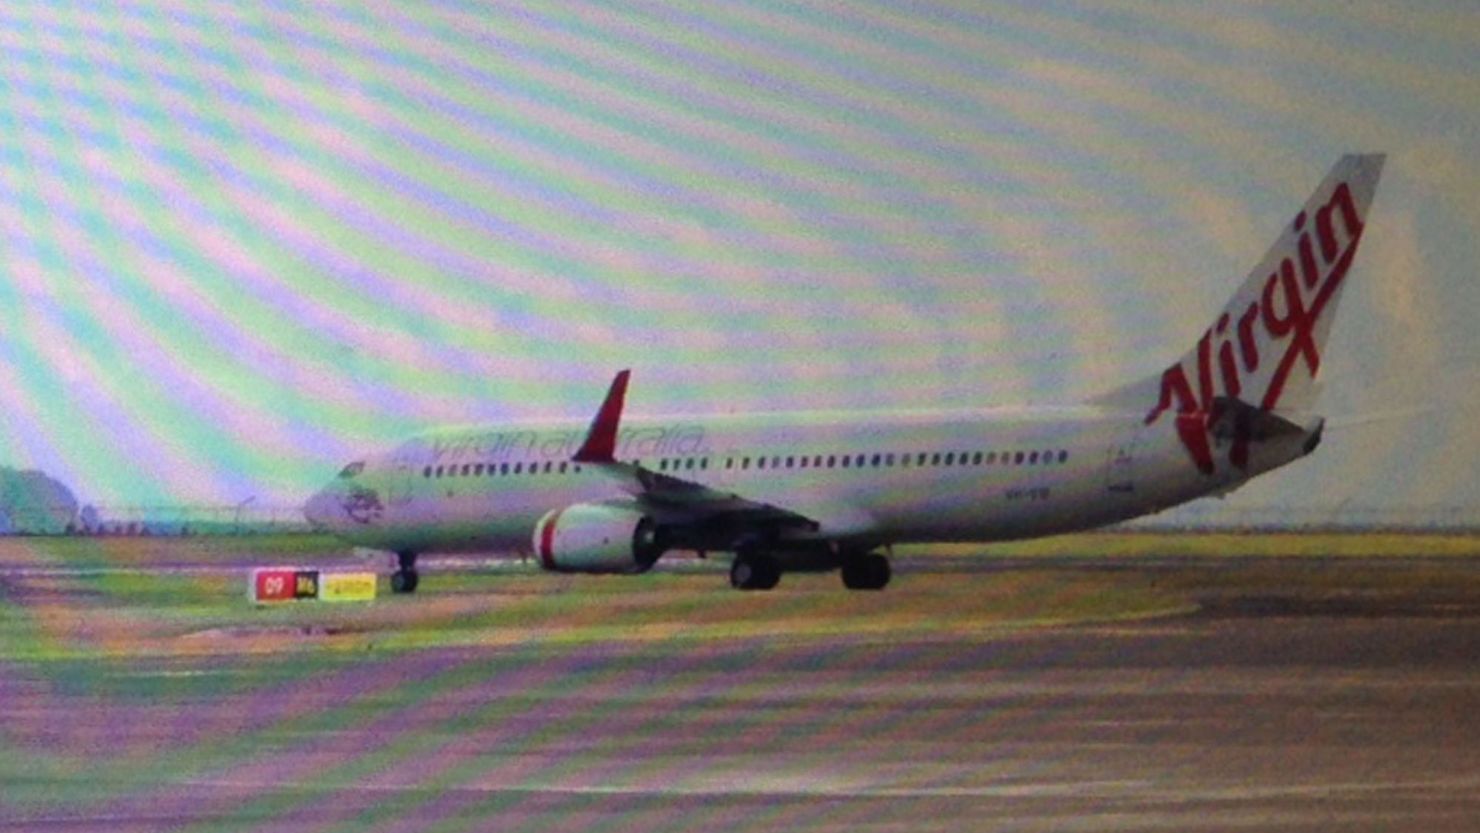 This photo, taken through a plane window, shows the Virgin Australia aircraft at Bali airport, Denpasar on April 25, 2014.